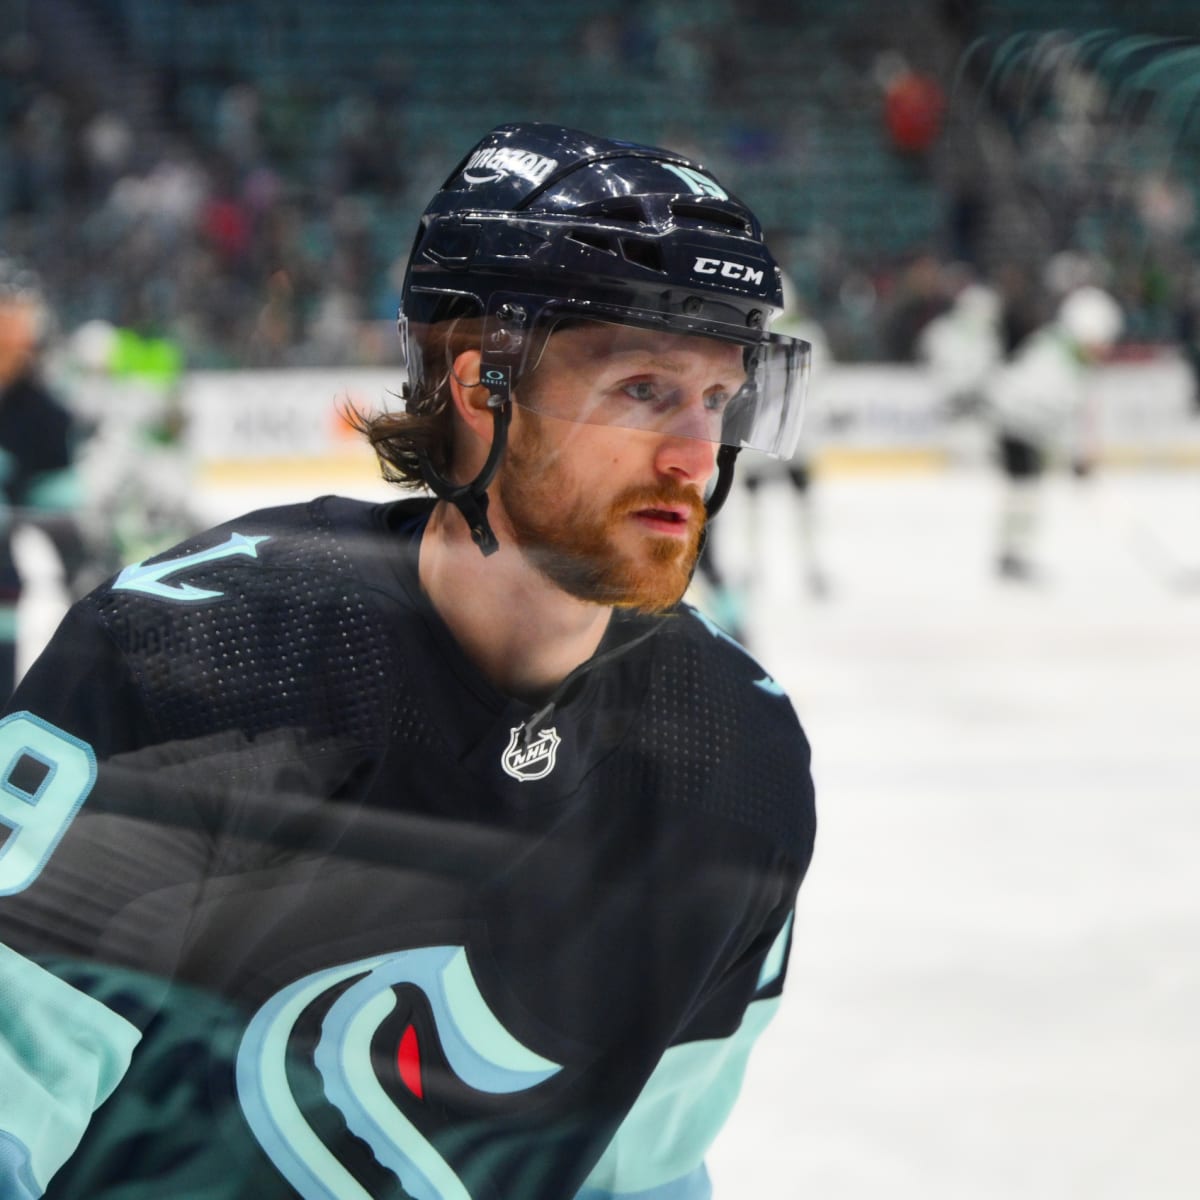 Rumor: Penguins forward Jared McCann on the trading block. - HockeyFeed